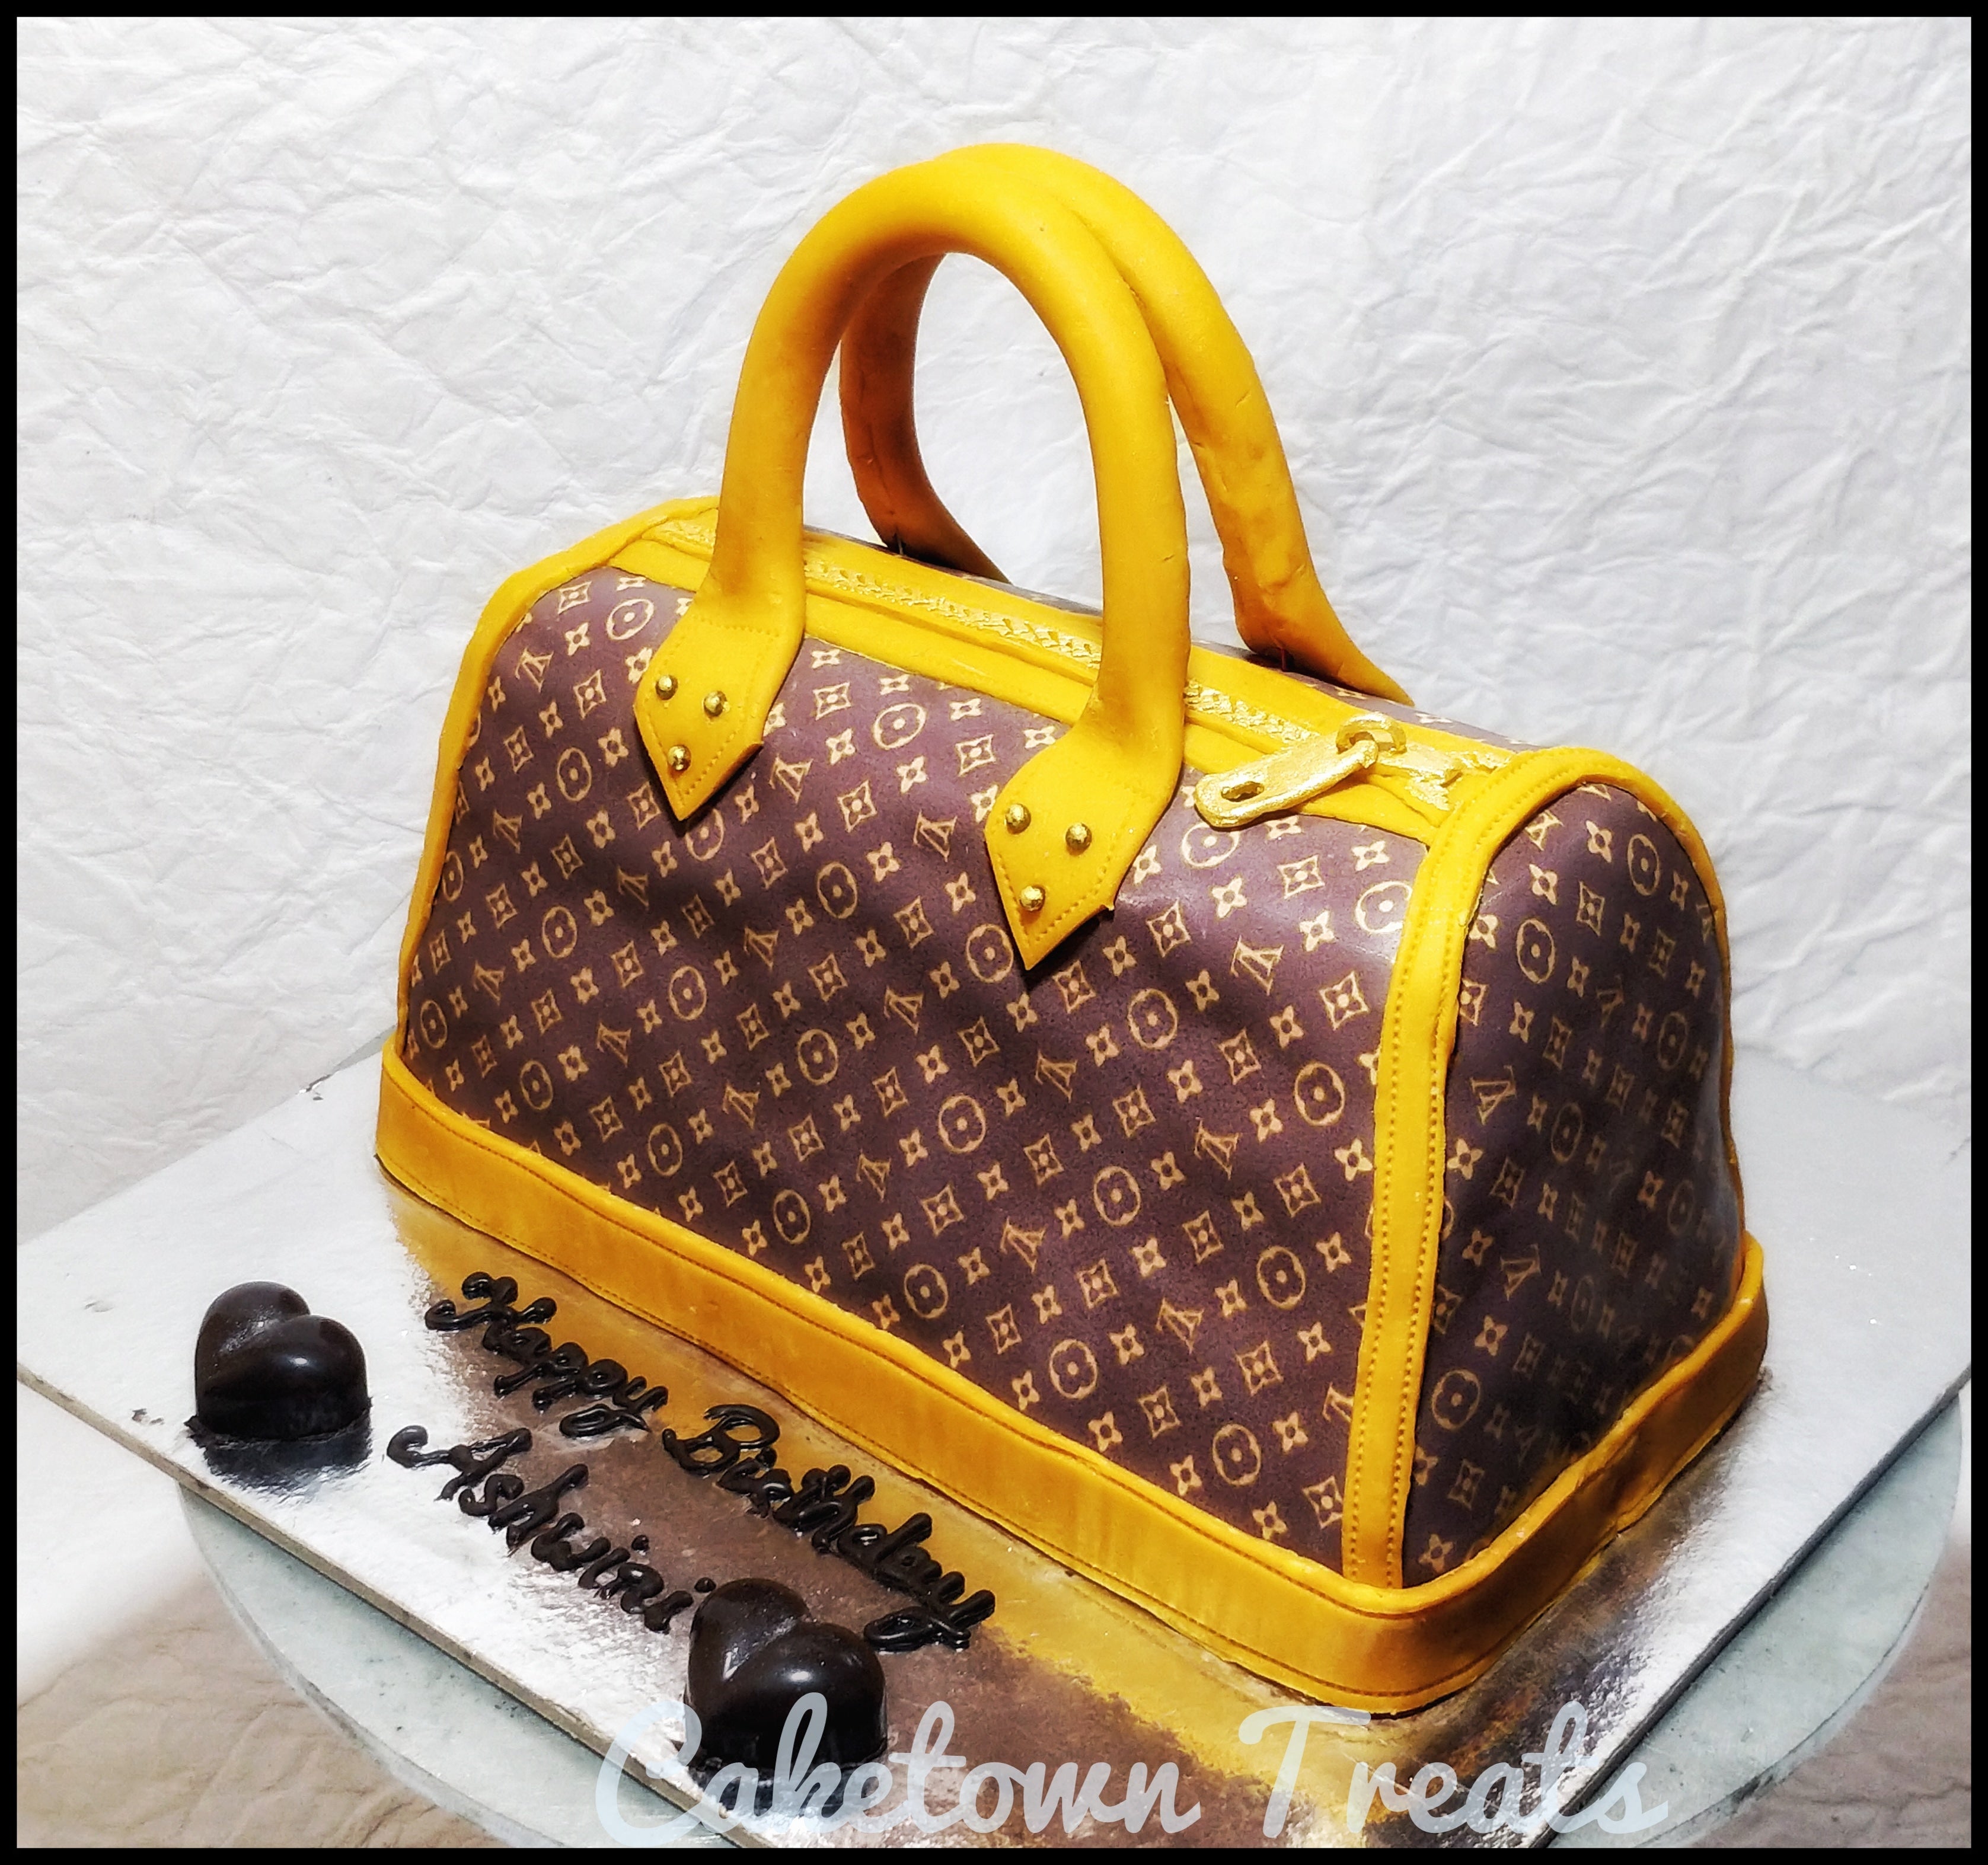 Louis Vuitton Hand Bag Cake – Caketown Treats